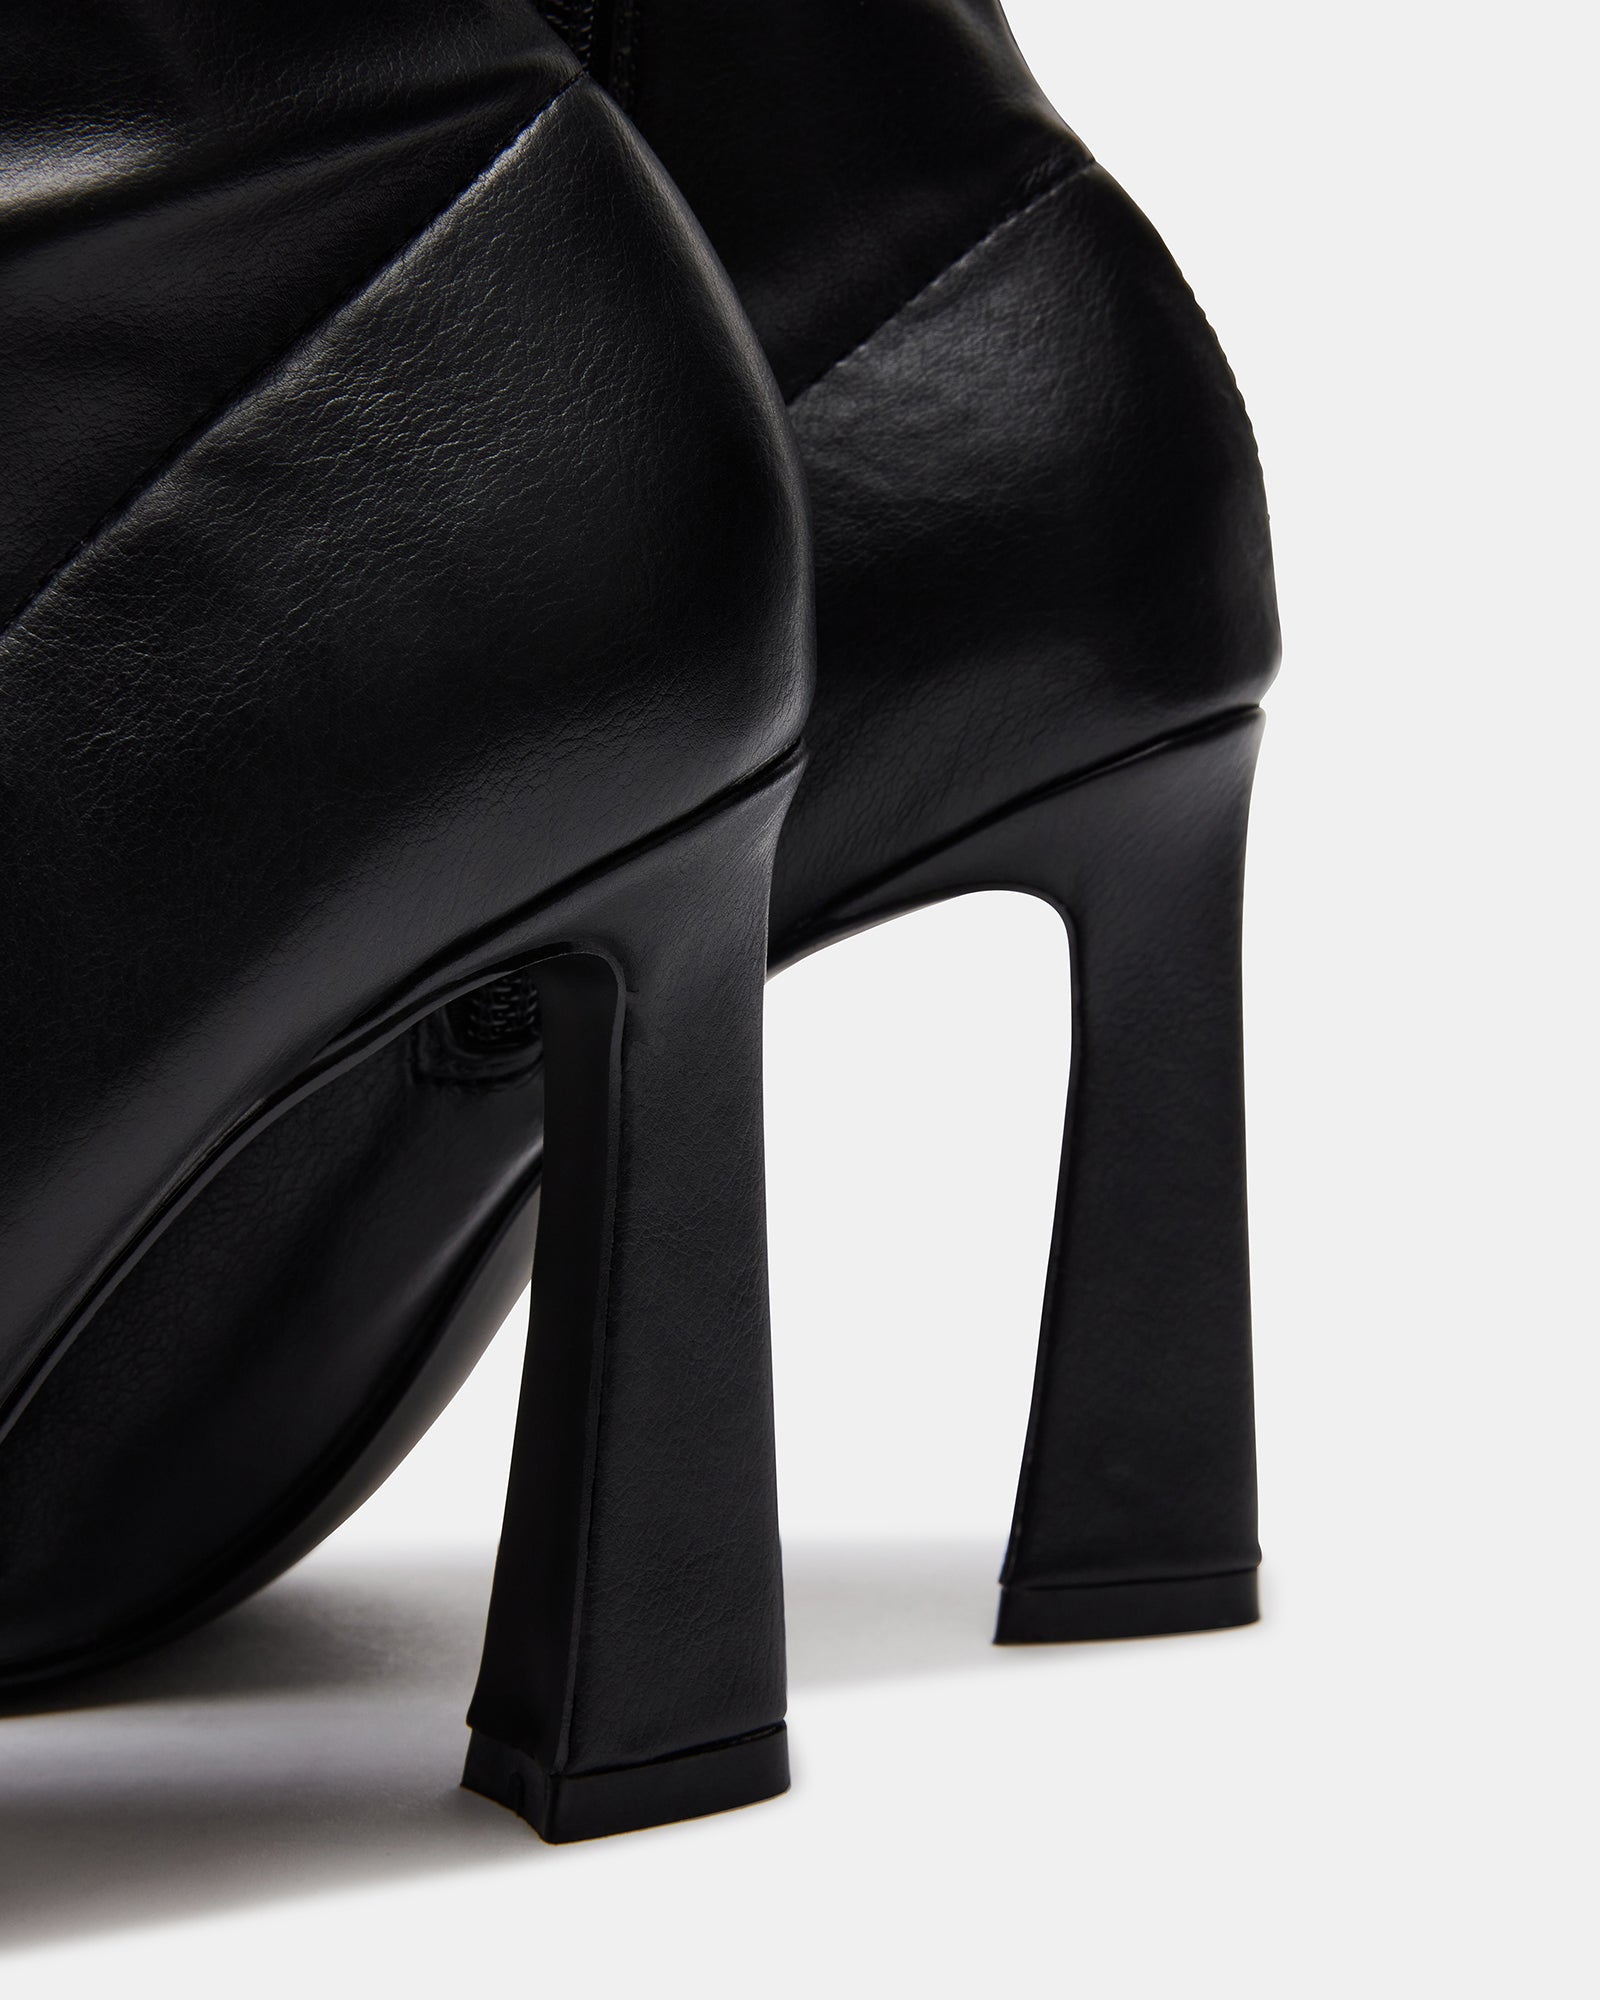 STRUT Black Over The Knee Pointed Toe Boot | Women's Boots – Steve Madden